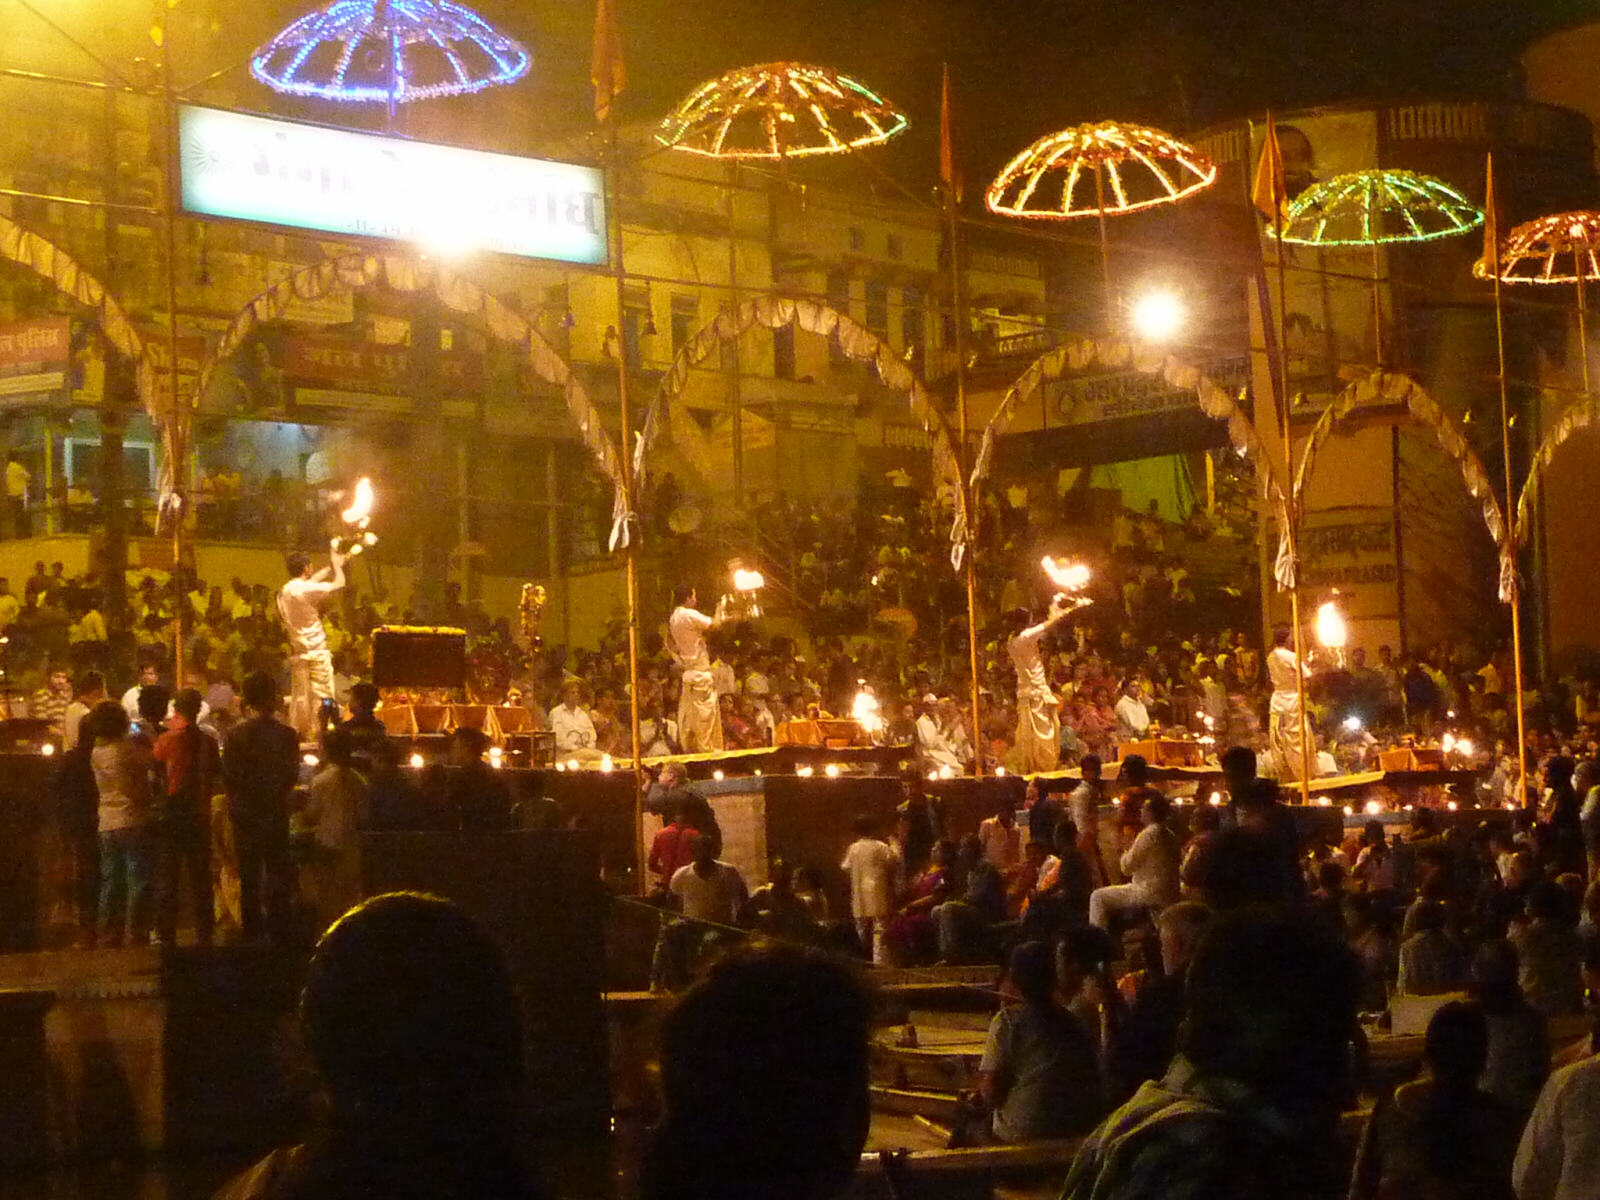 The Ganga Aarti evening ceremony in Varanasi, India